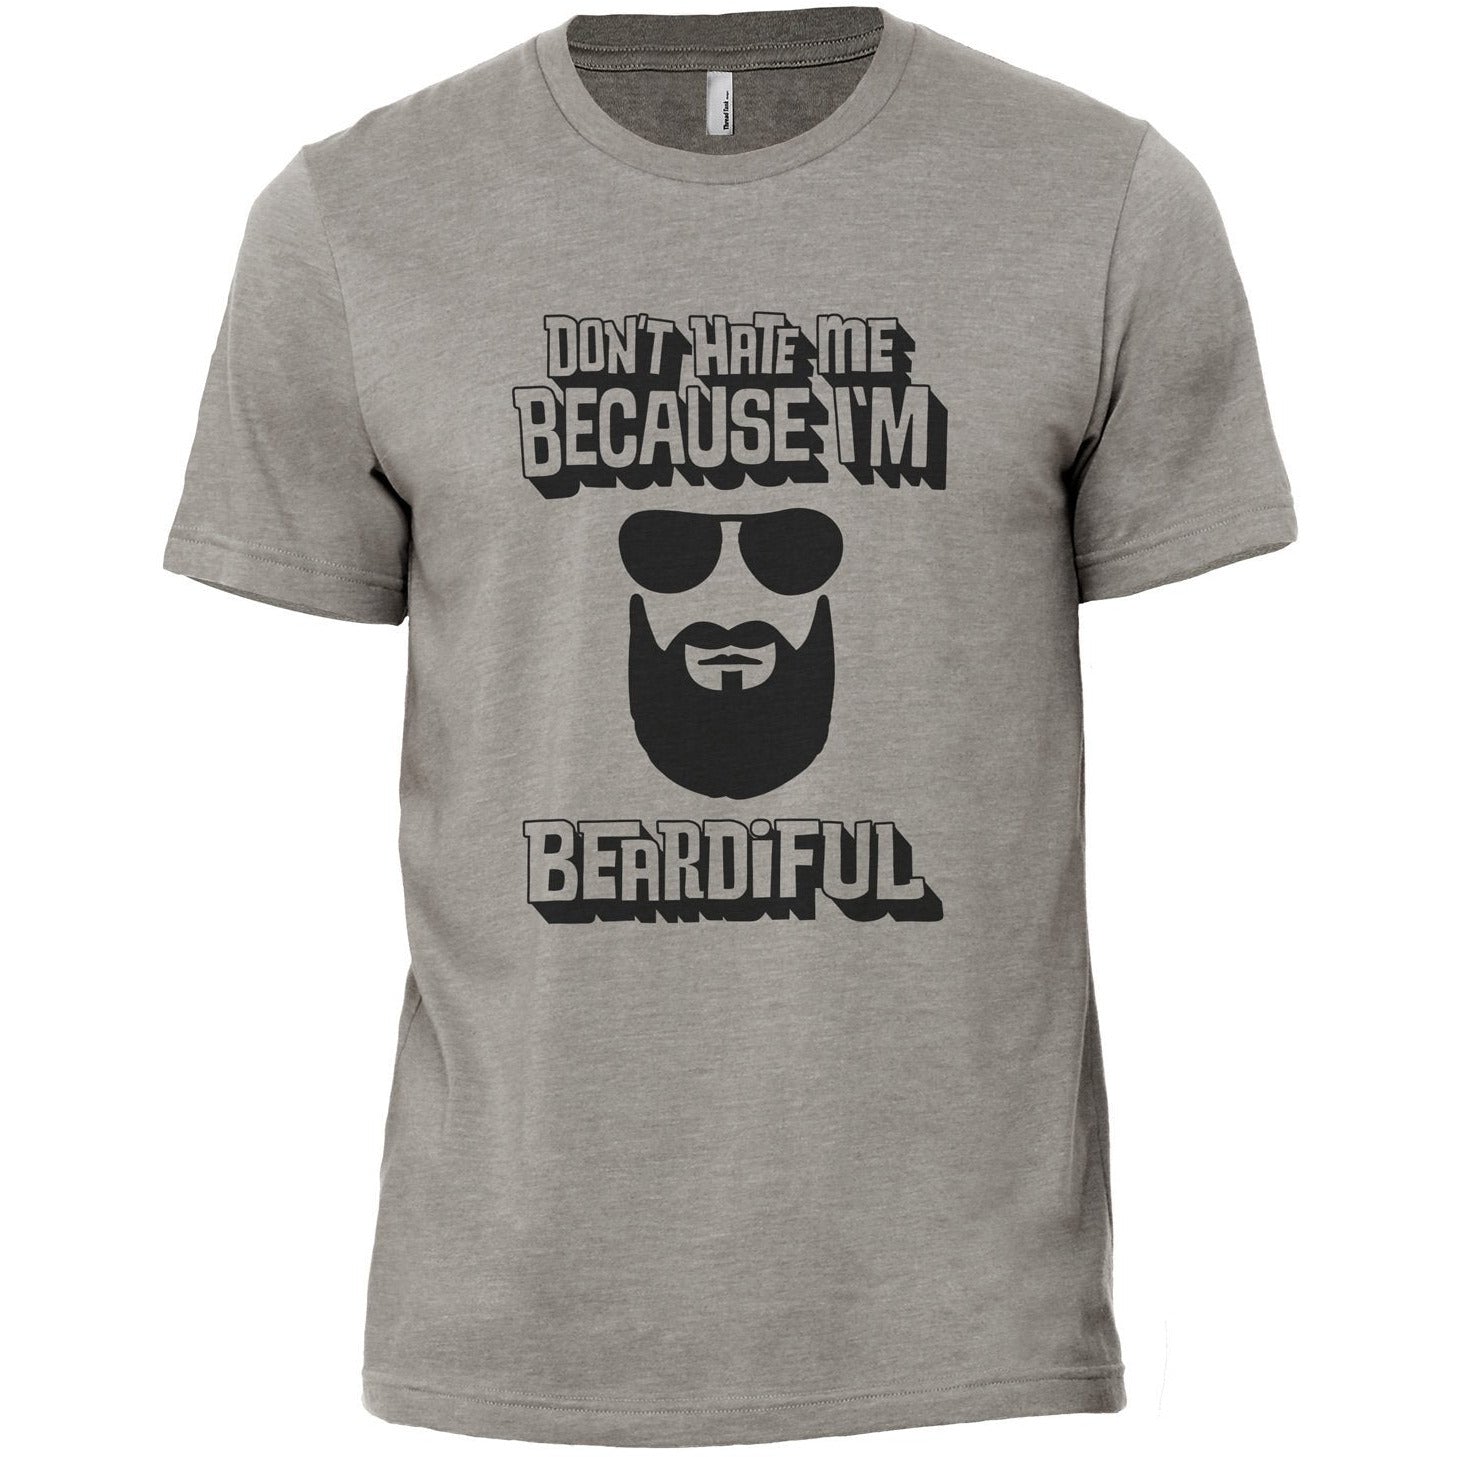 Dont Hate Me Because Im Beardiful Military Grey Printed Graphic Men's Crew T-Shirt Tee